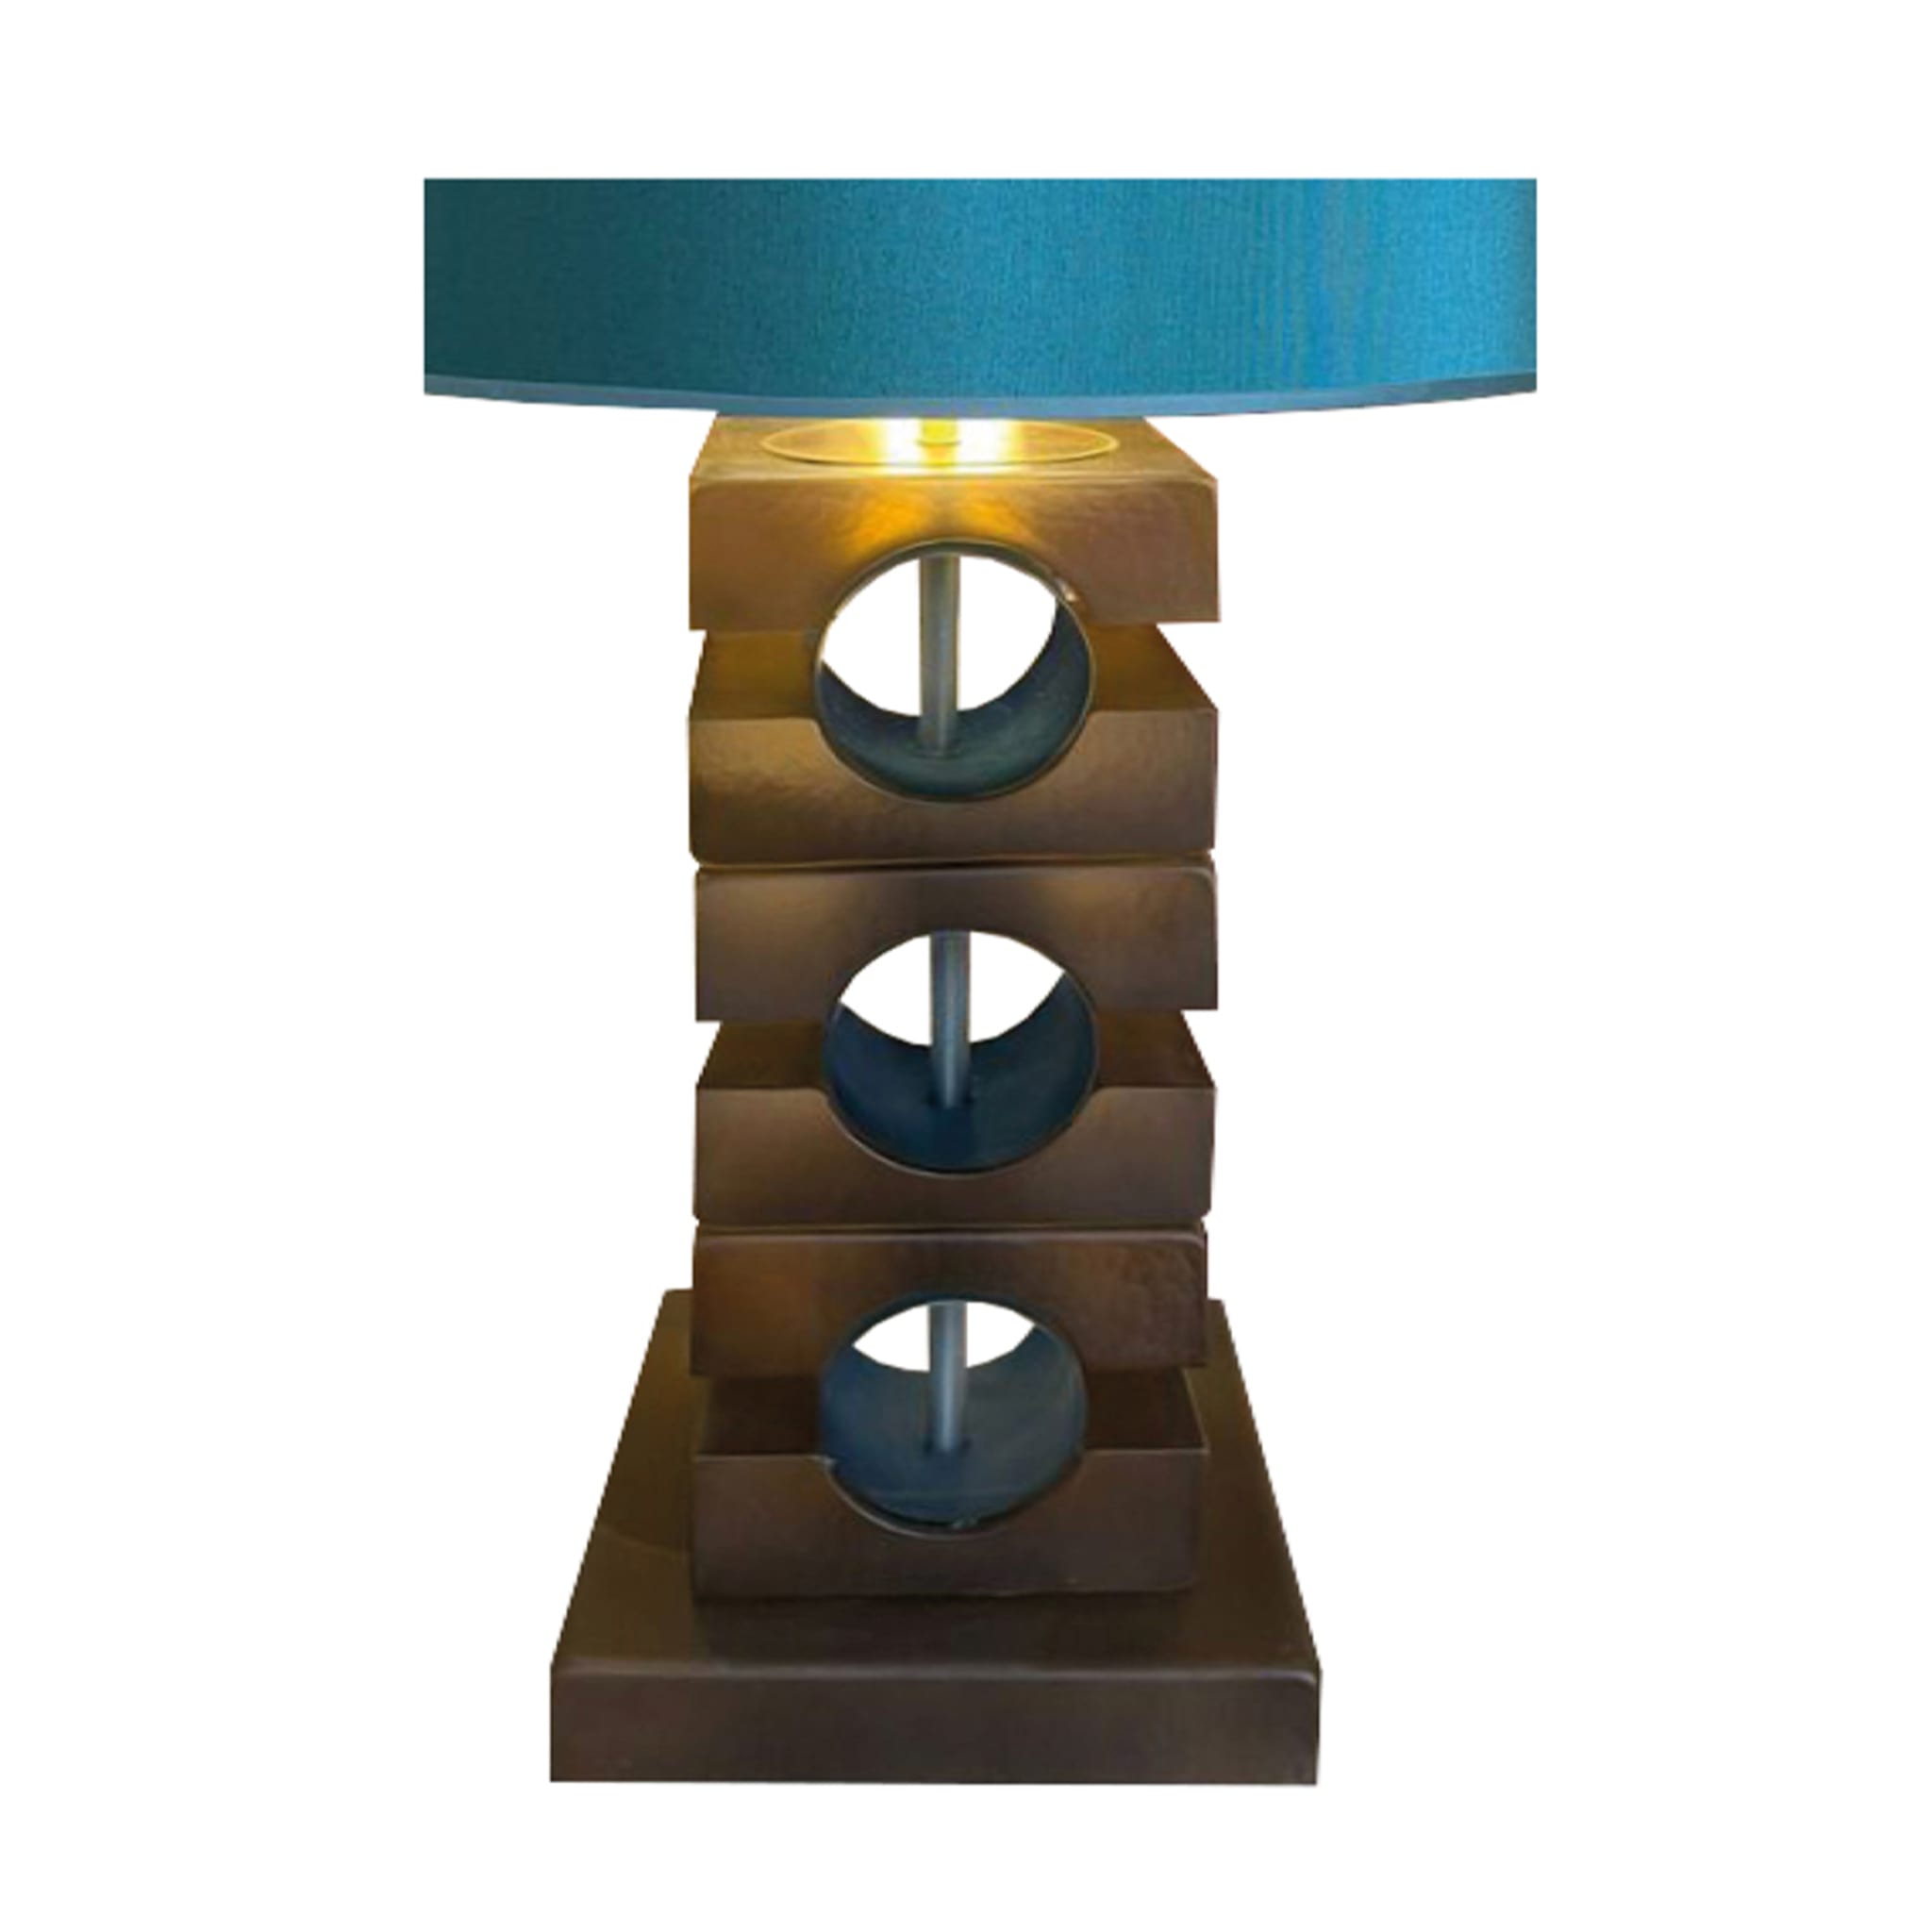 PONTE table lamp - Alternative view 1